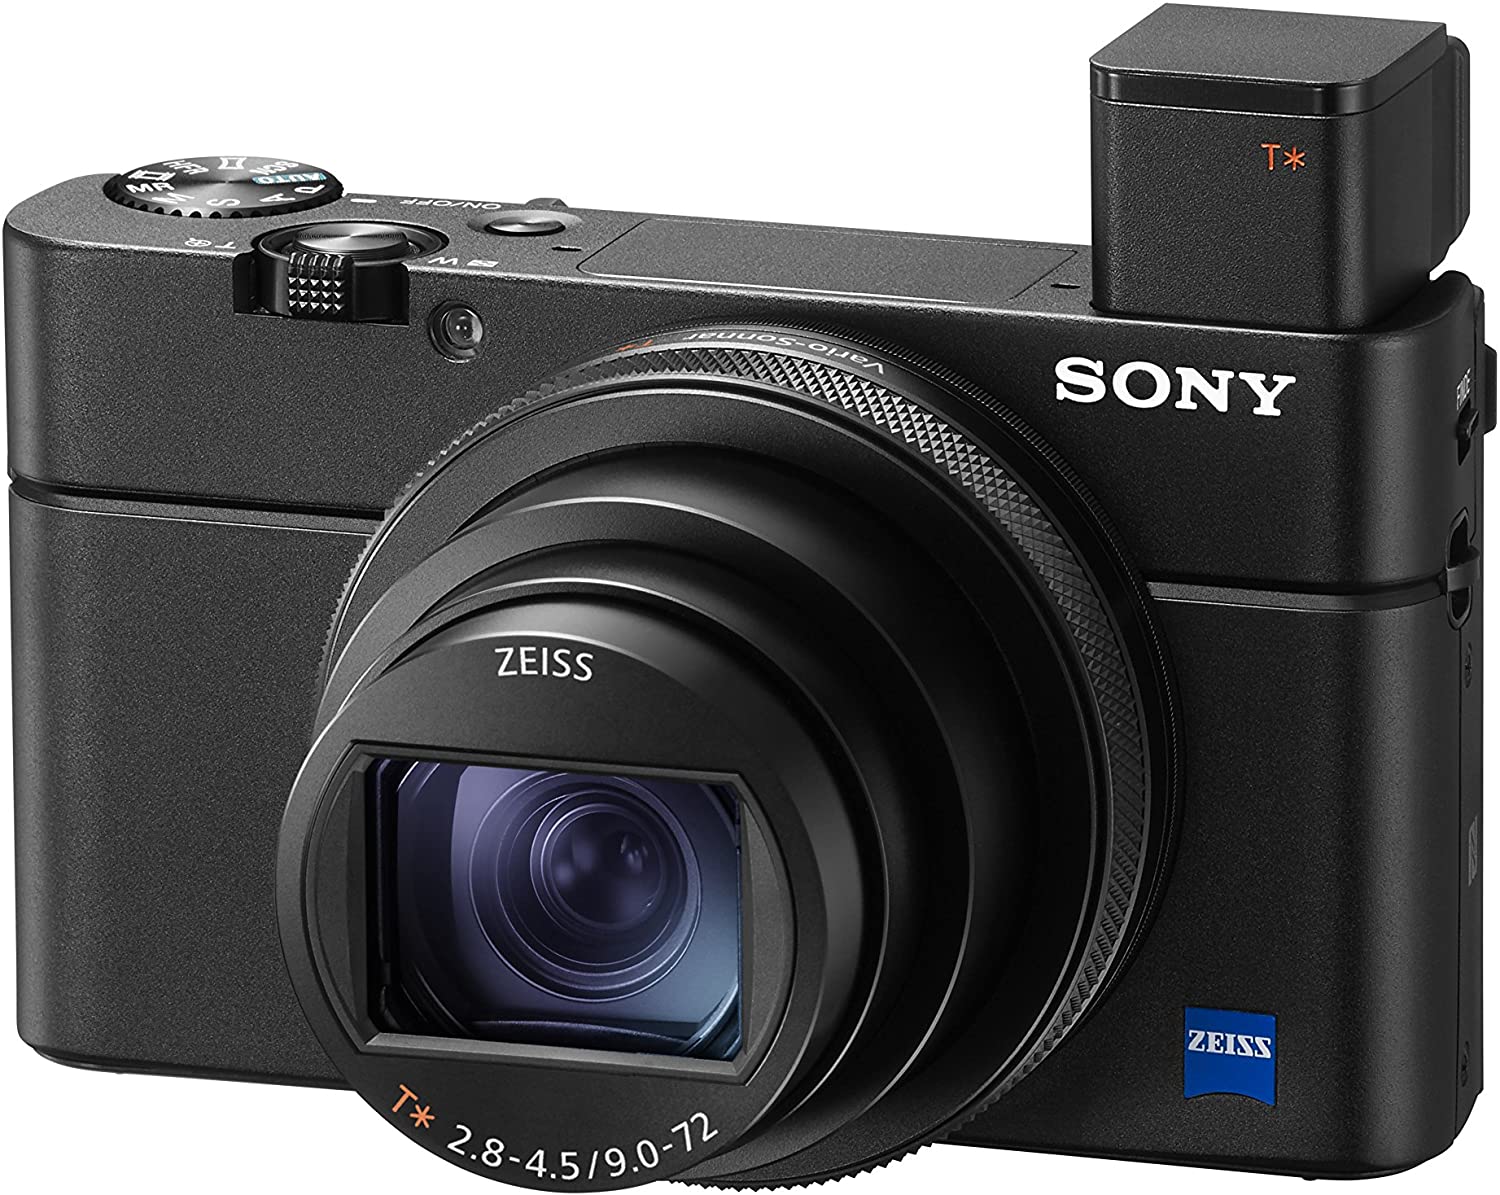 Prime Day Camera Deal: Sony RX100 VI